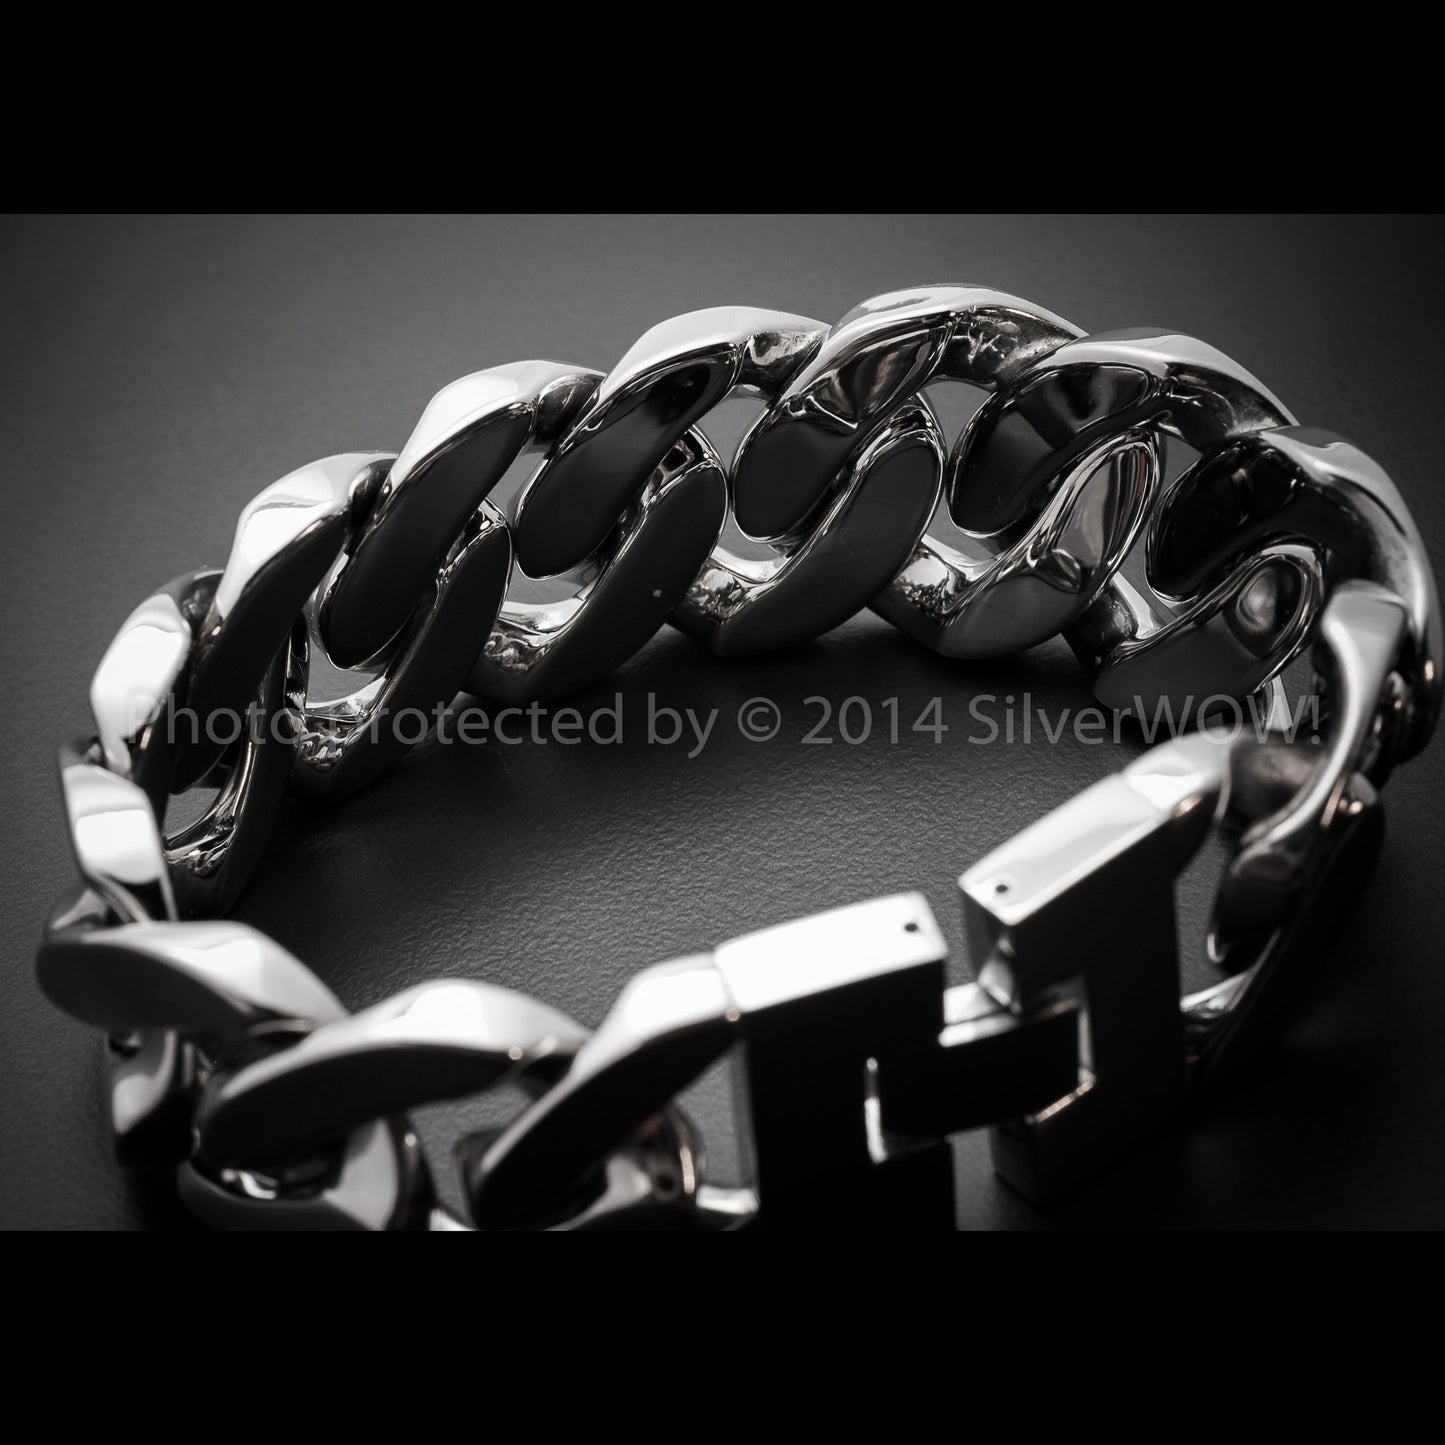 25mm Stainless Steel Curb Bracelet